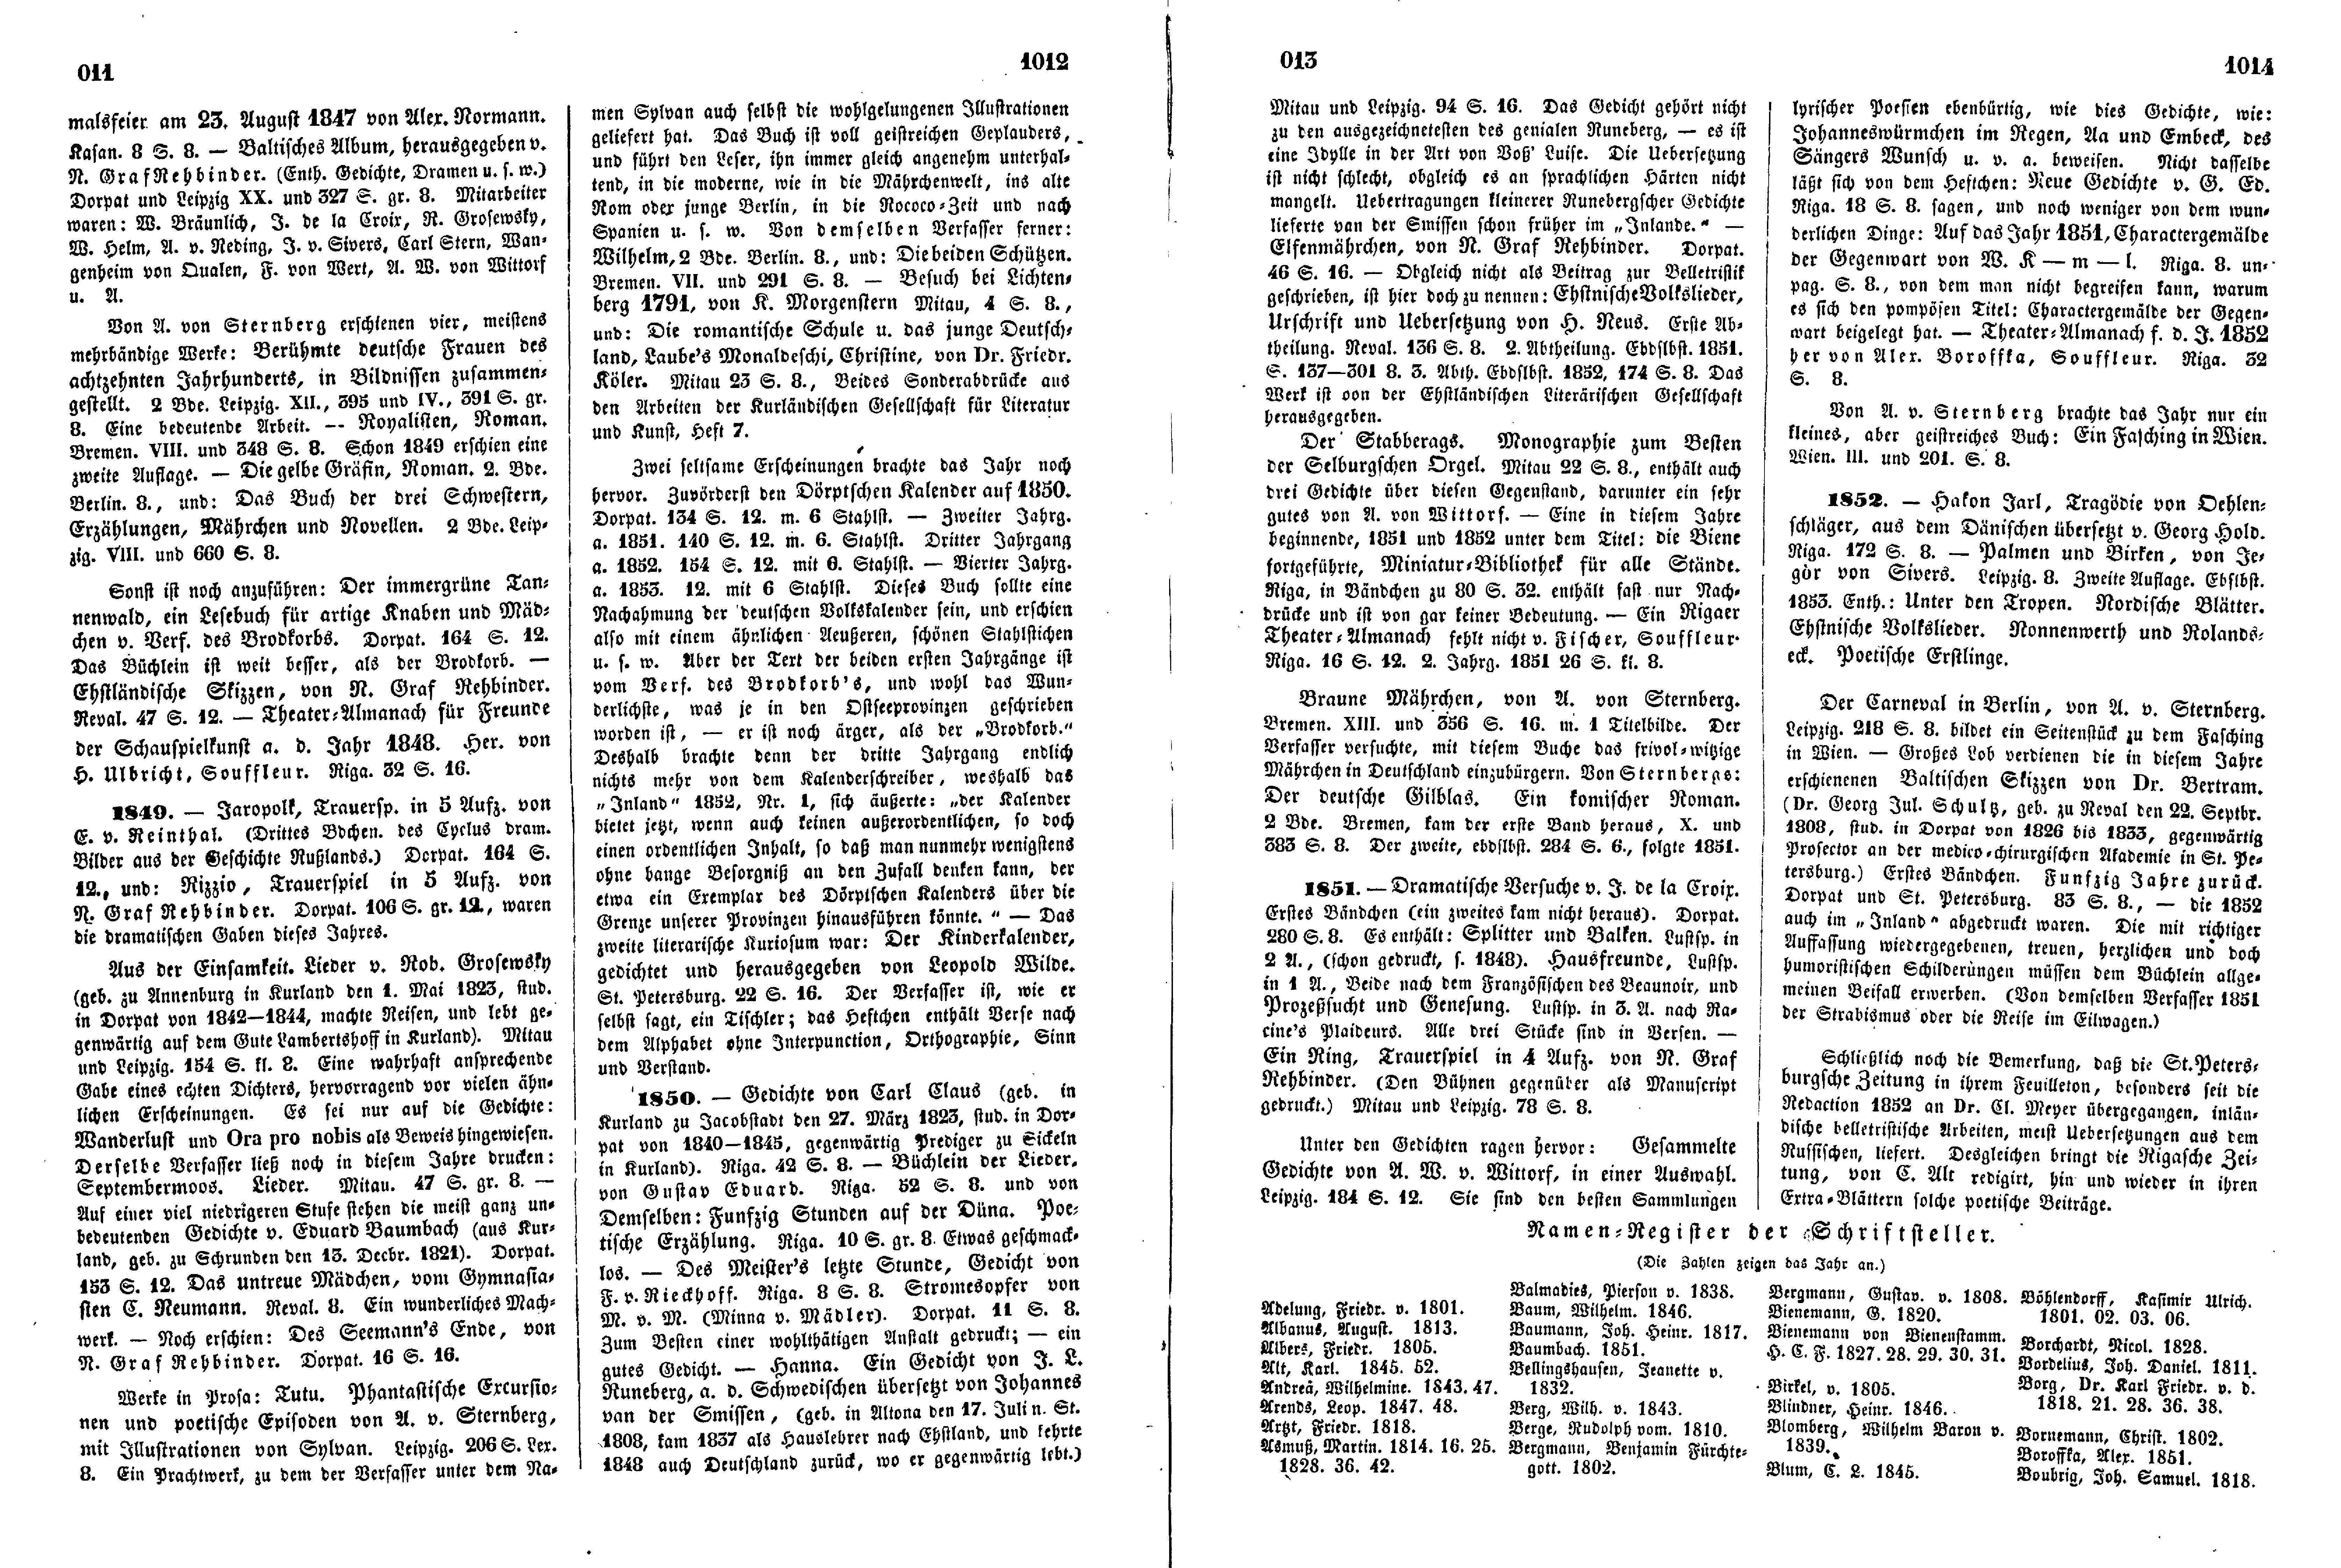 Das Inland [18] (1853) | 263. (1011-1014) Main body of text